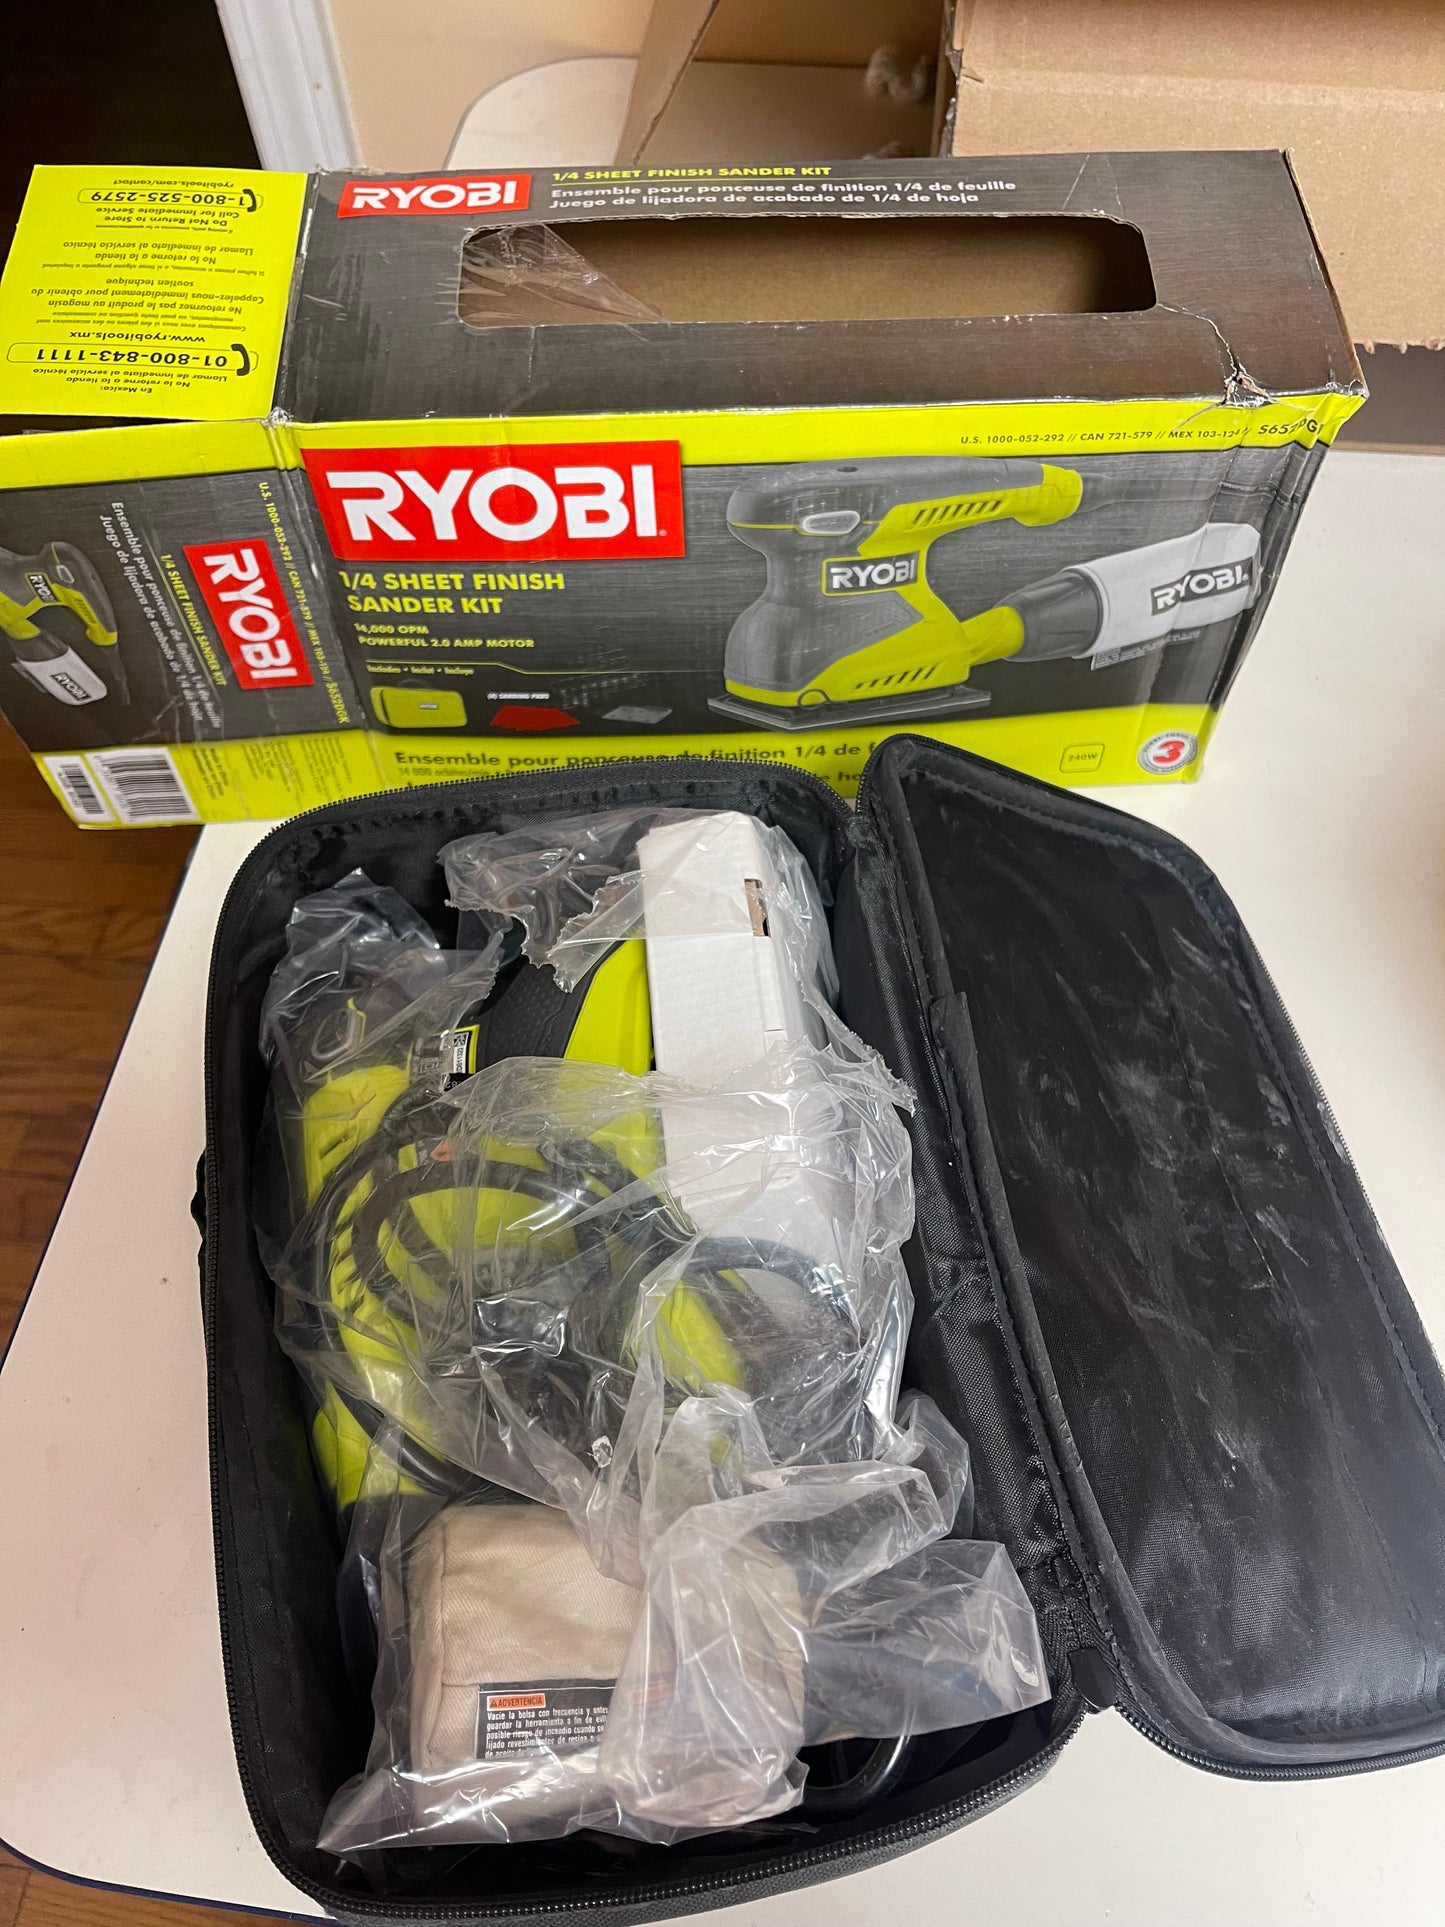 Ryobi 2 Amp Corded 1/4 Sheet Sander Damaged Box